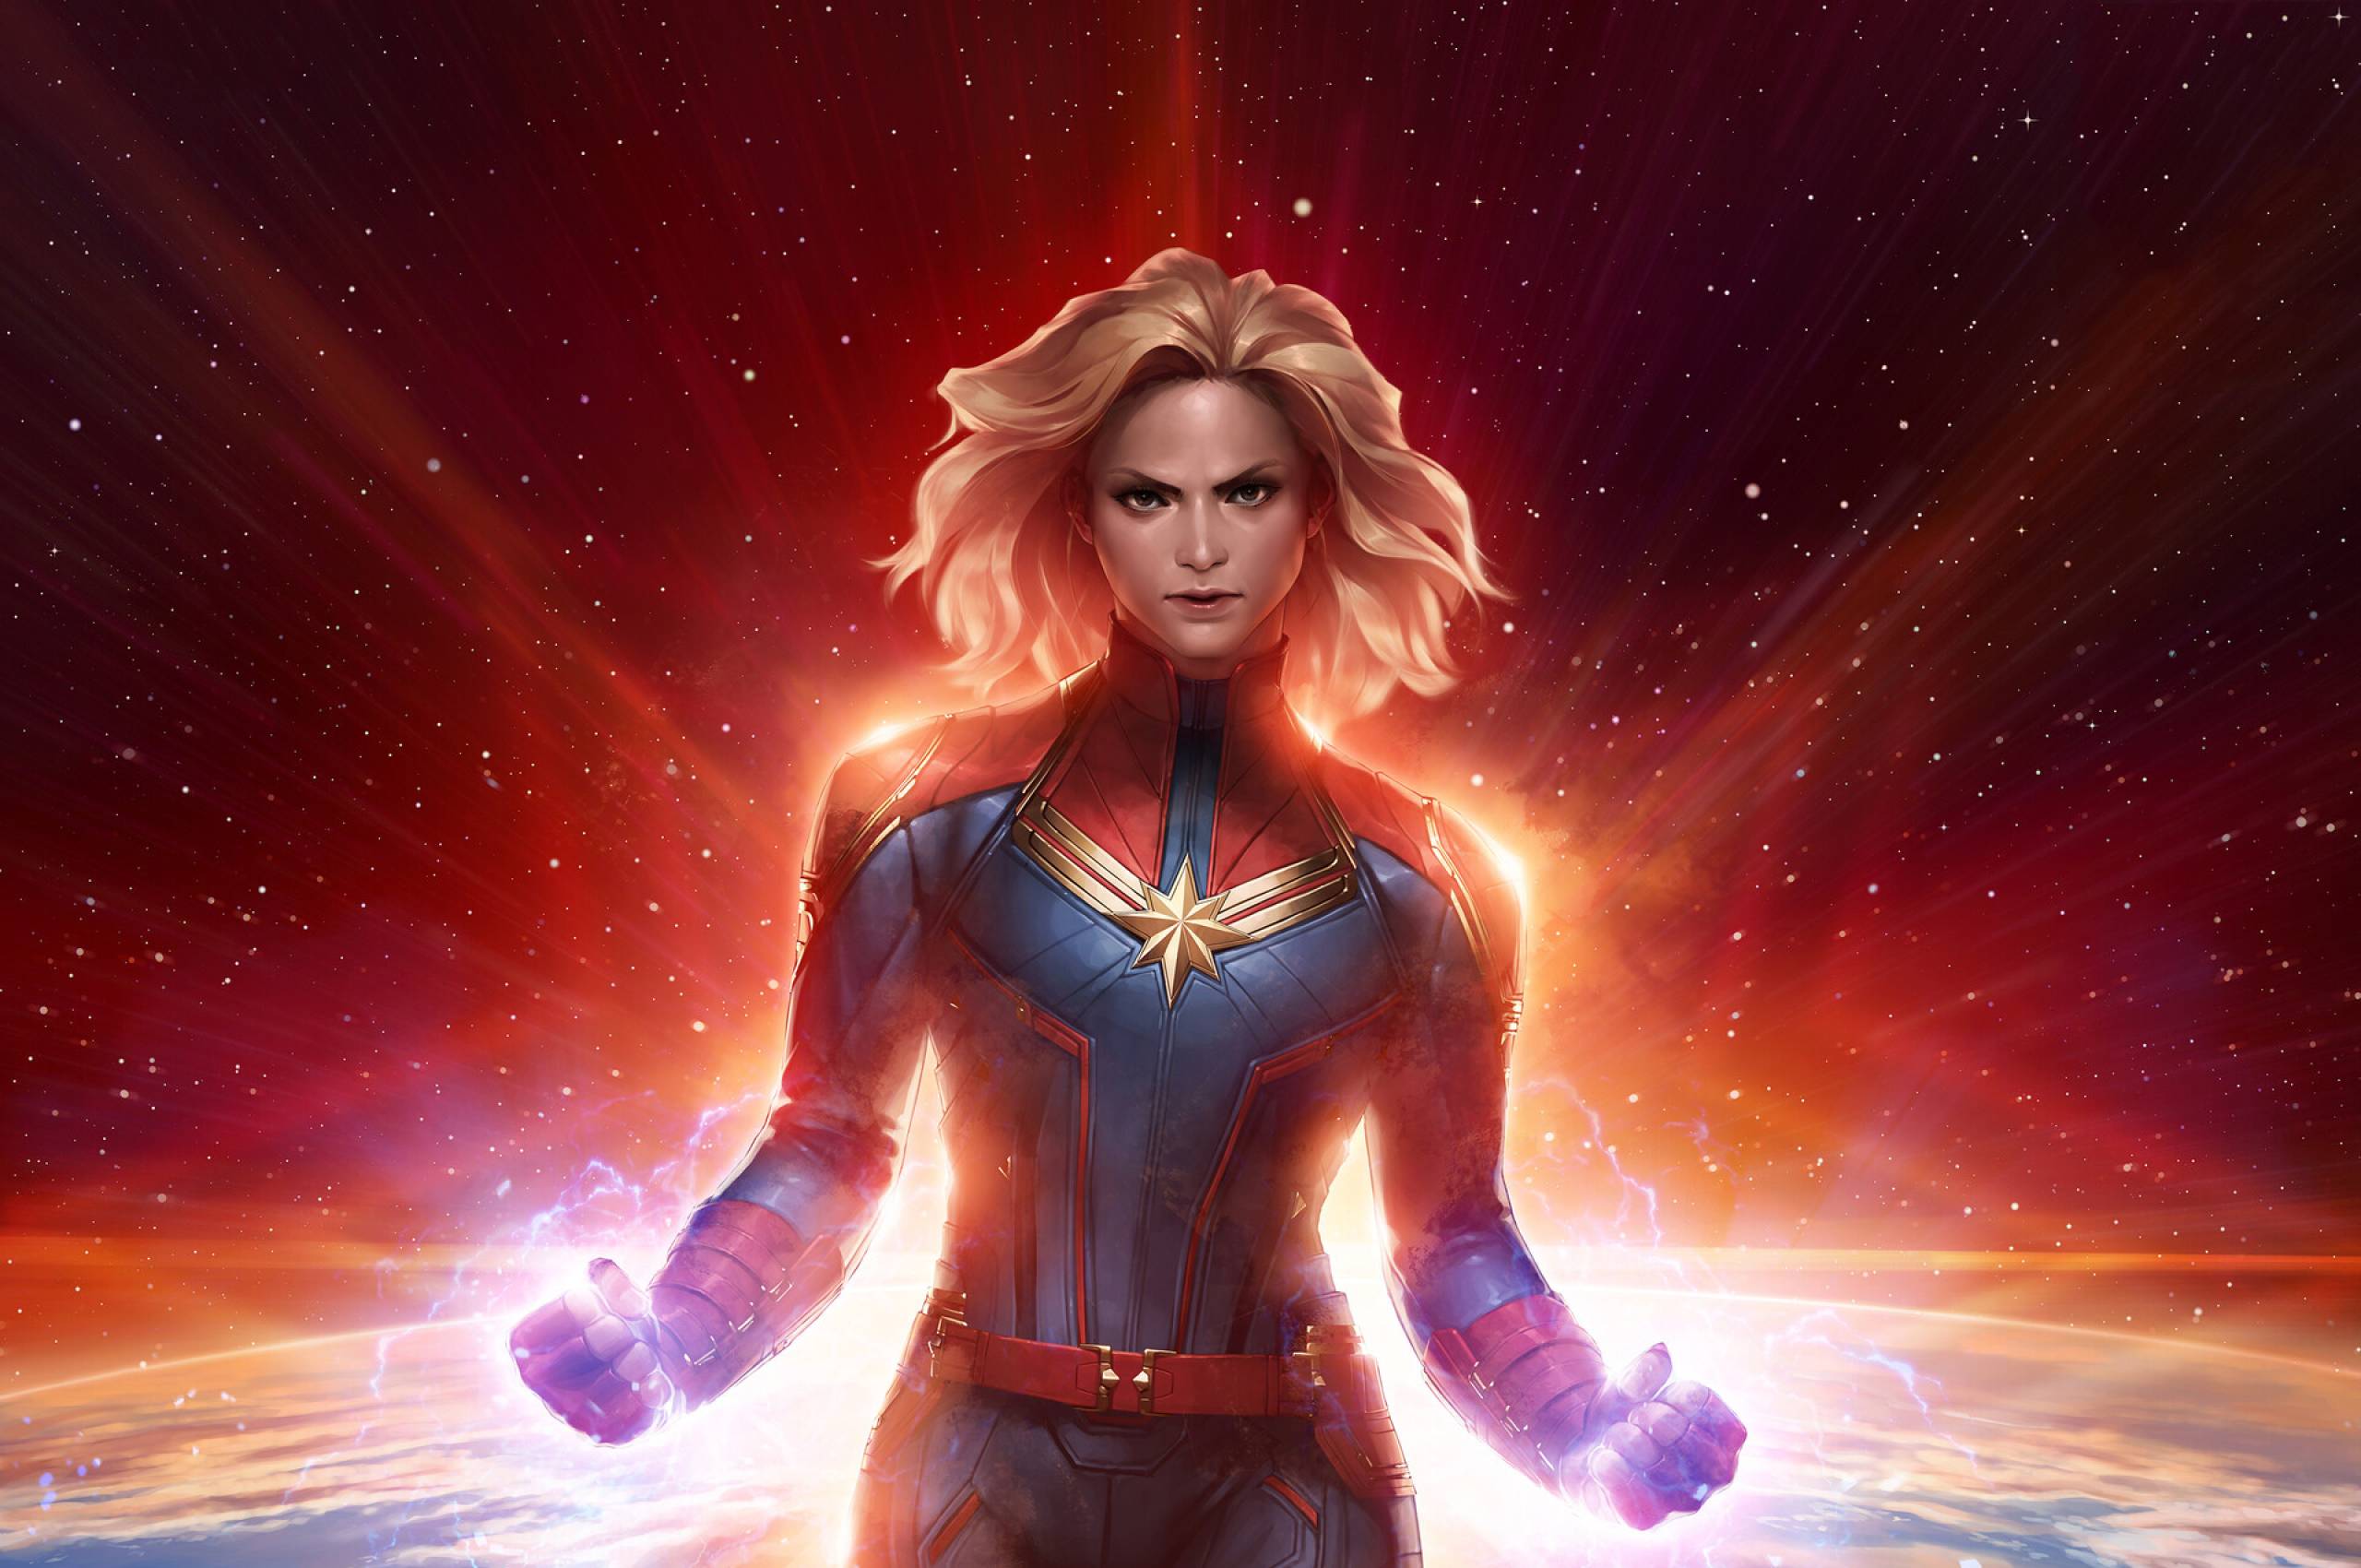 Marvel's captain america civil war 2016 hd wallpaper - Marvel